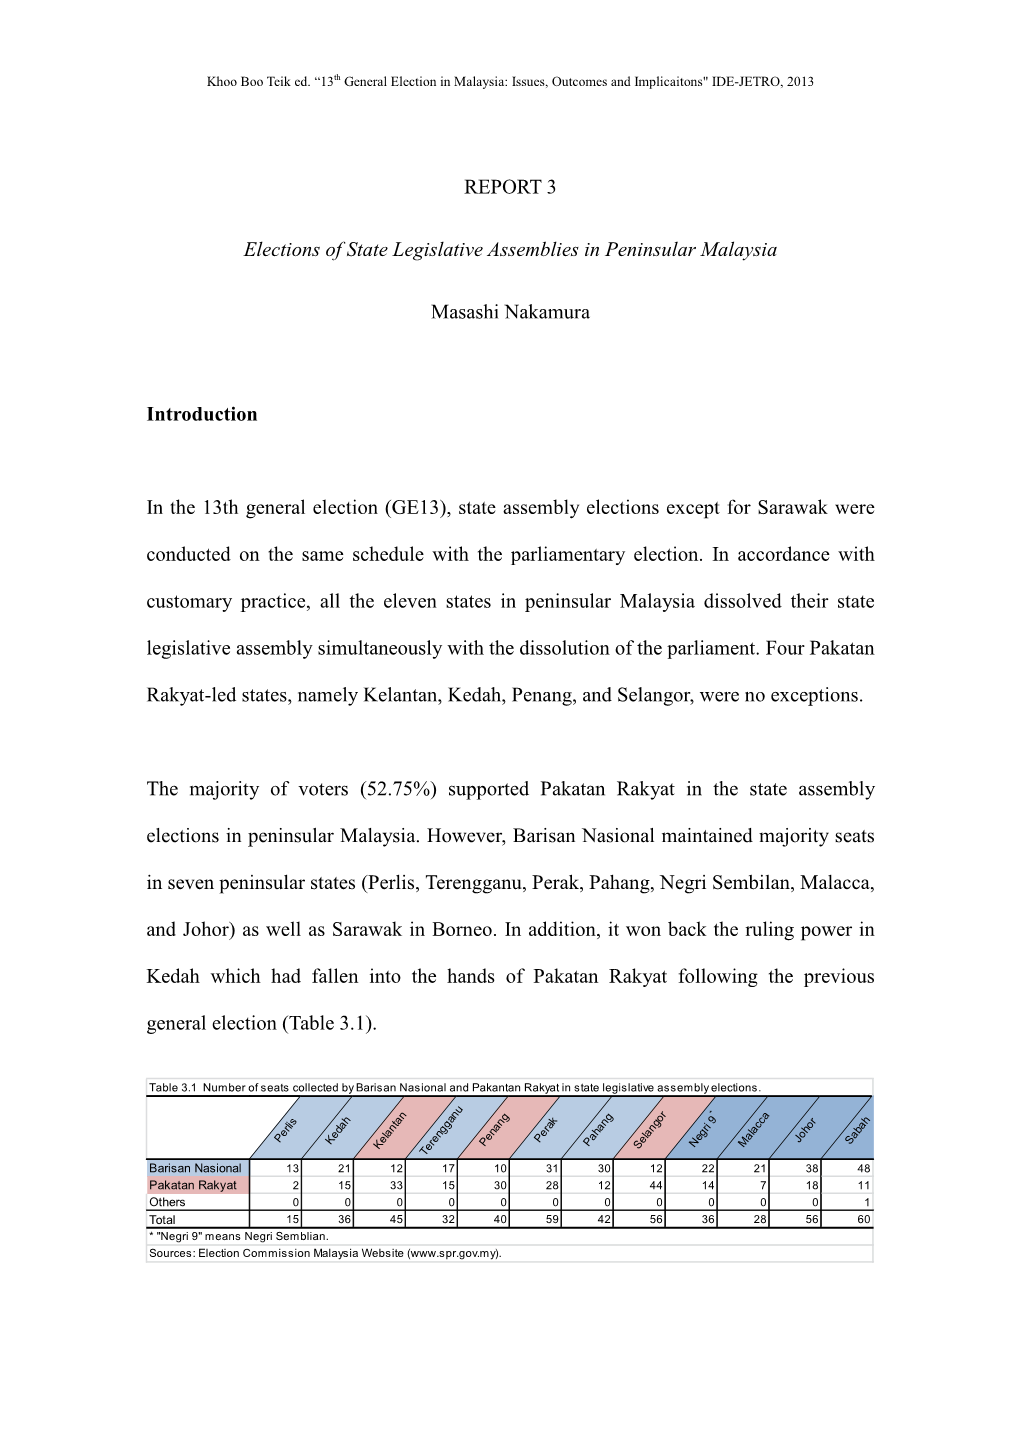 Elections of State Legislative Assemblies in Peninsular Malaysia